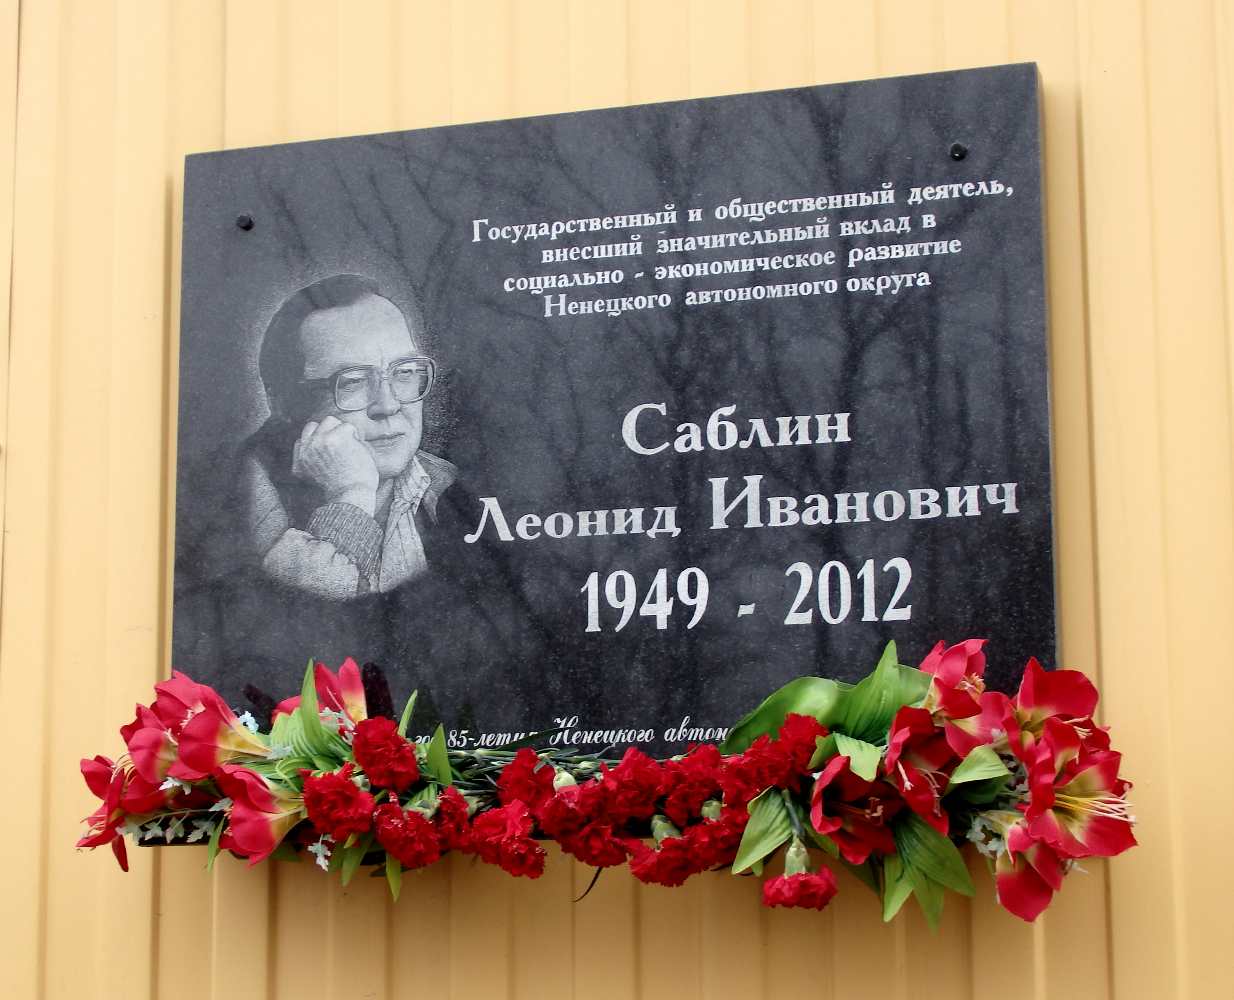 Naryan-Mar, Улица 60-летия Октября, 42. Naryan-Mar — Memorial plaques